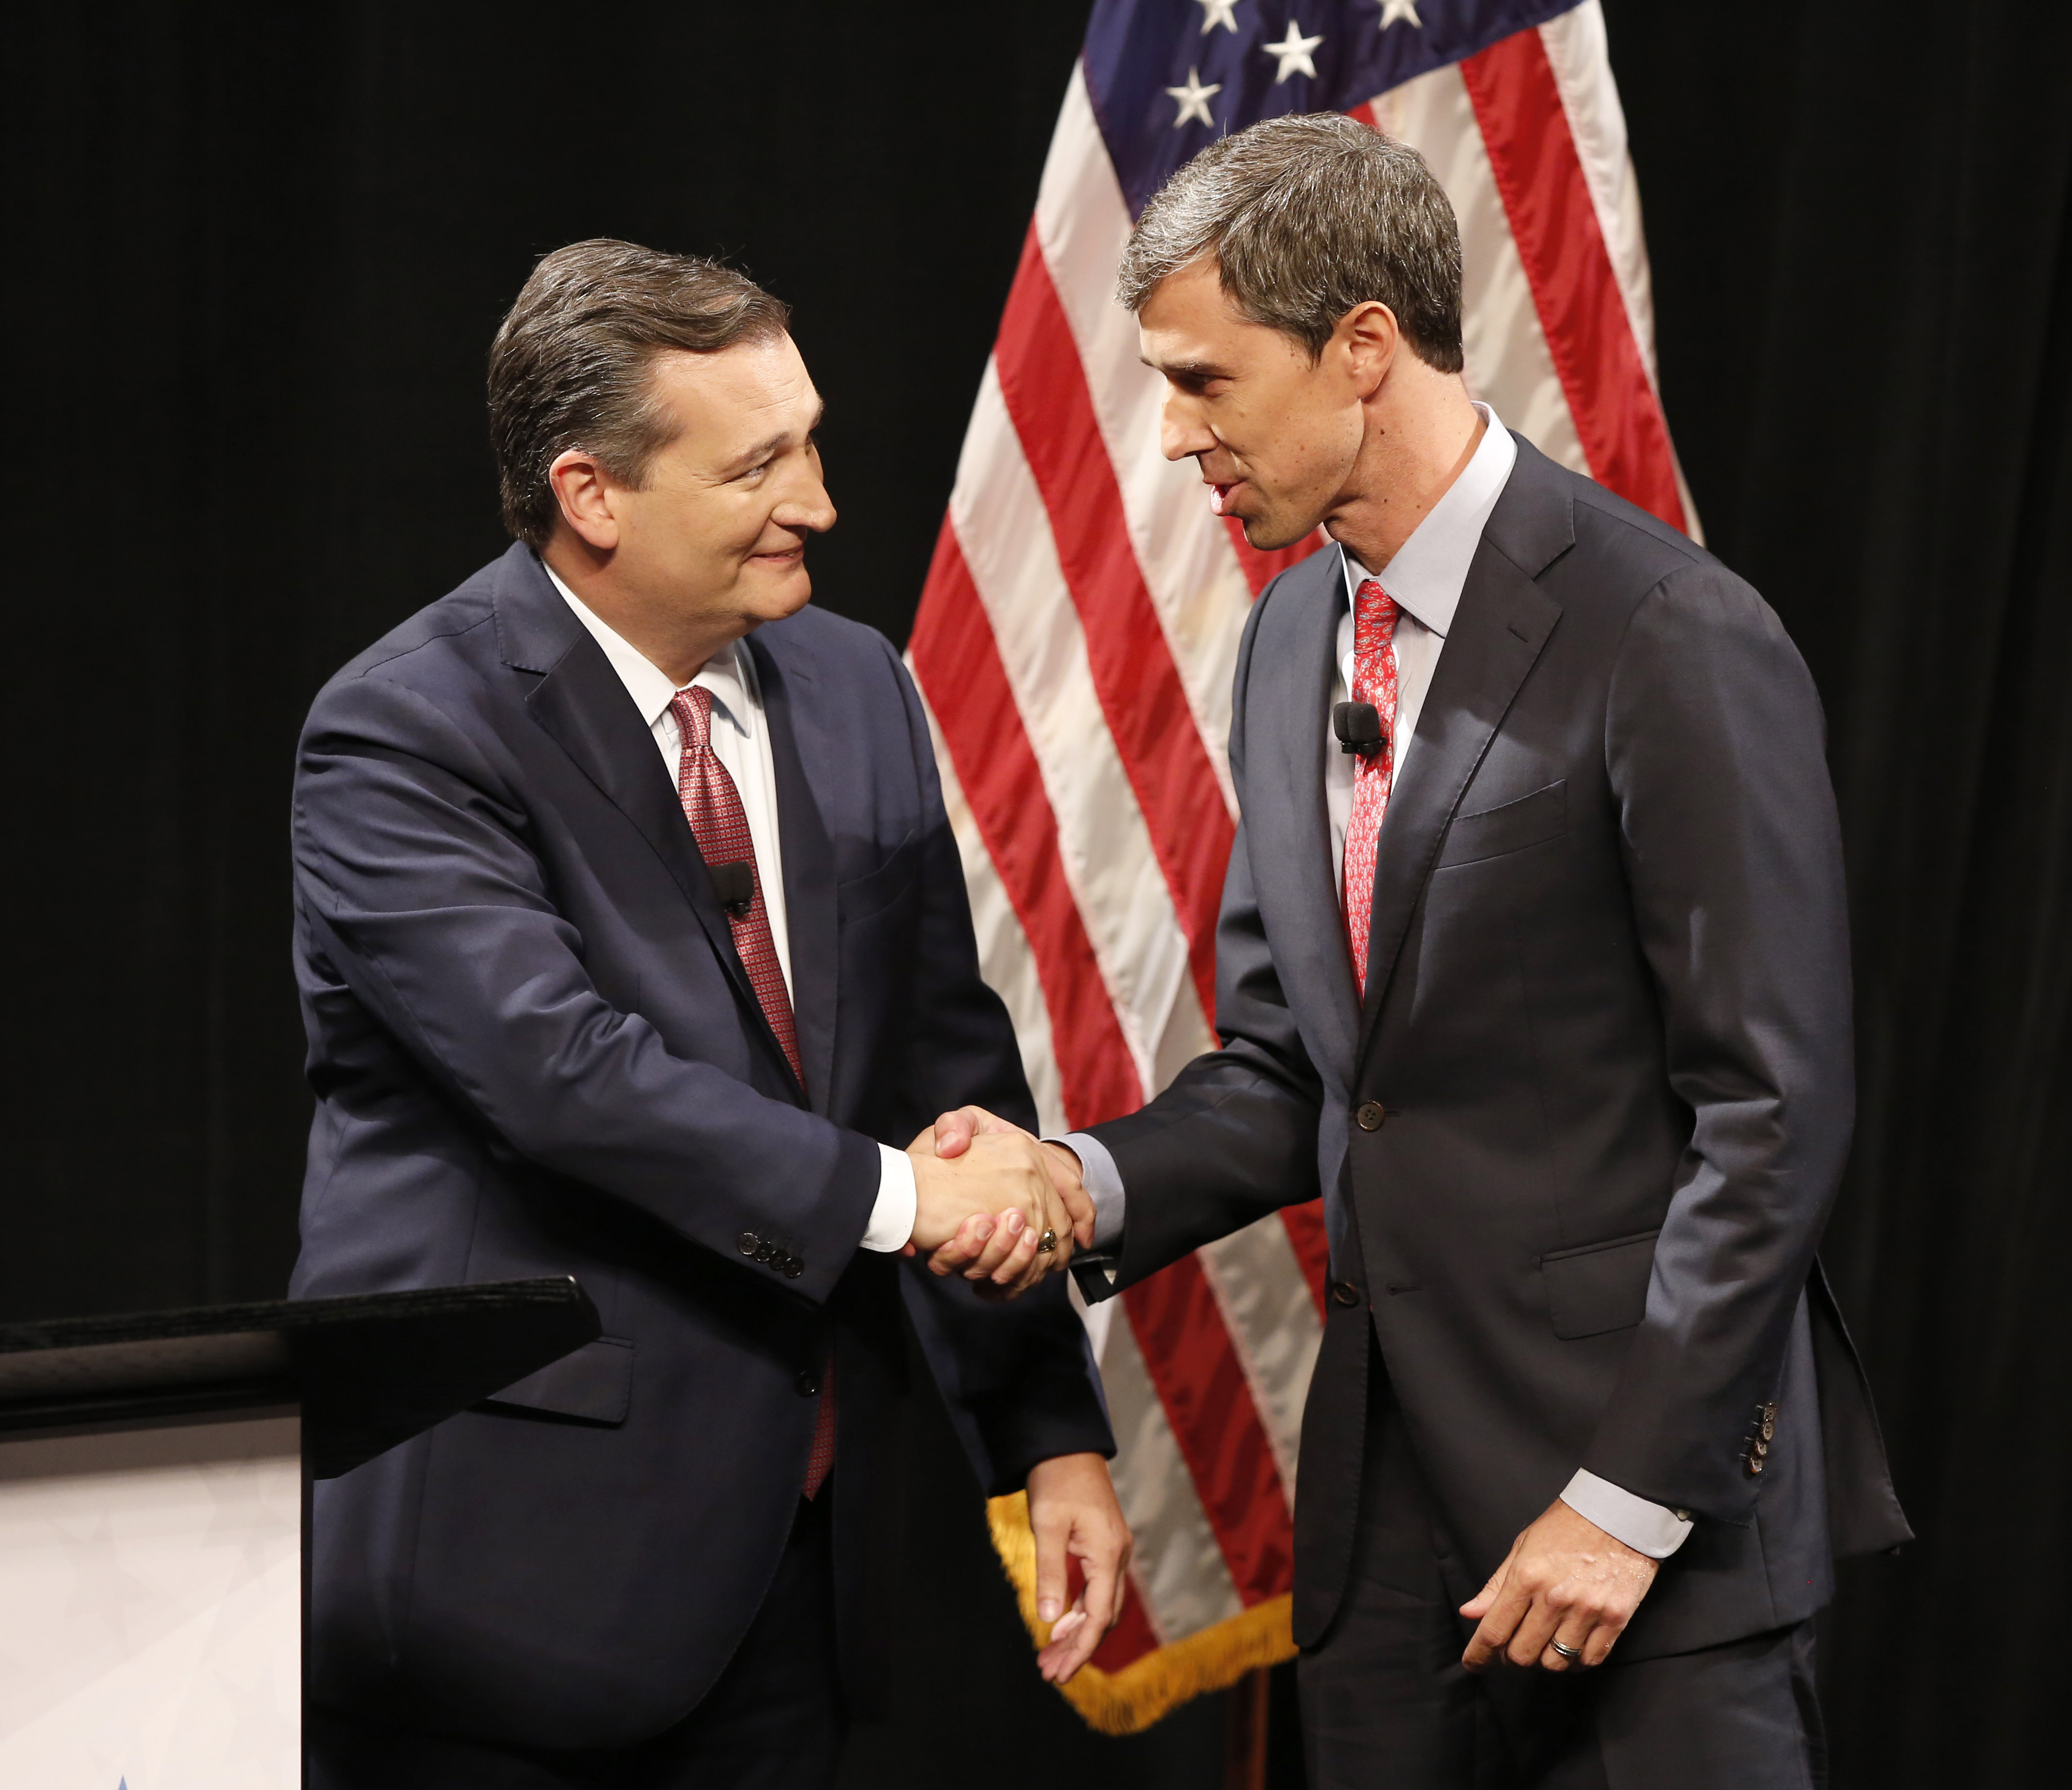 Texas Senate Candidates Ted Cruz And Beto O’Rourke Debate In Dallas